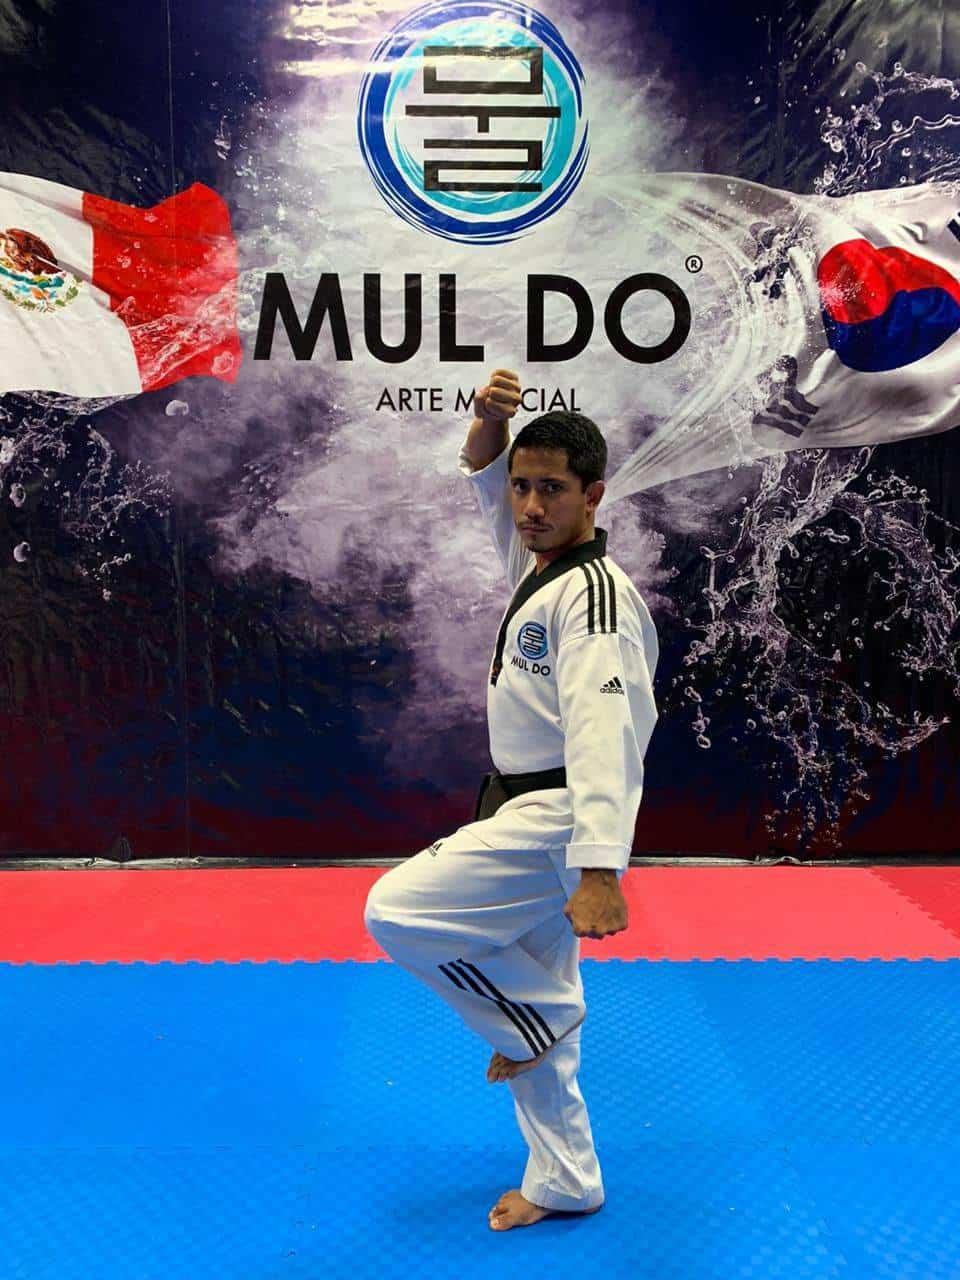 Abre puertas Muldo Taekwondo en Veracruz